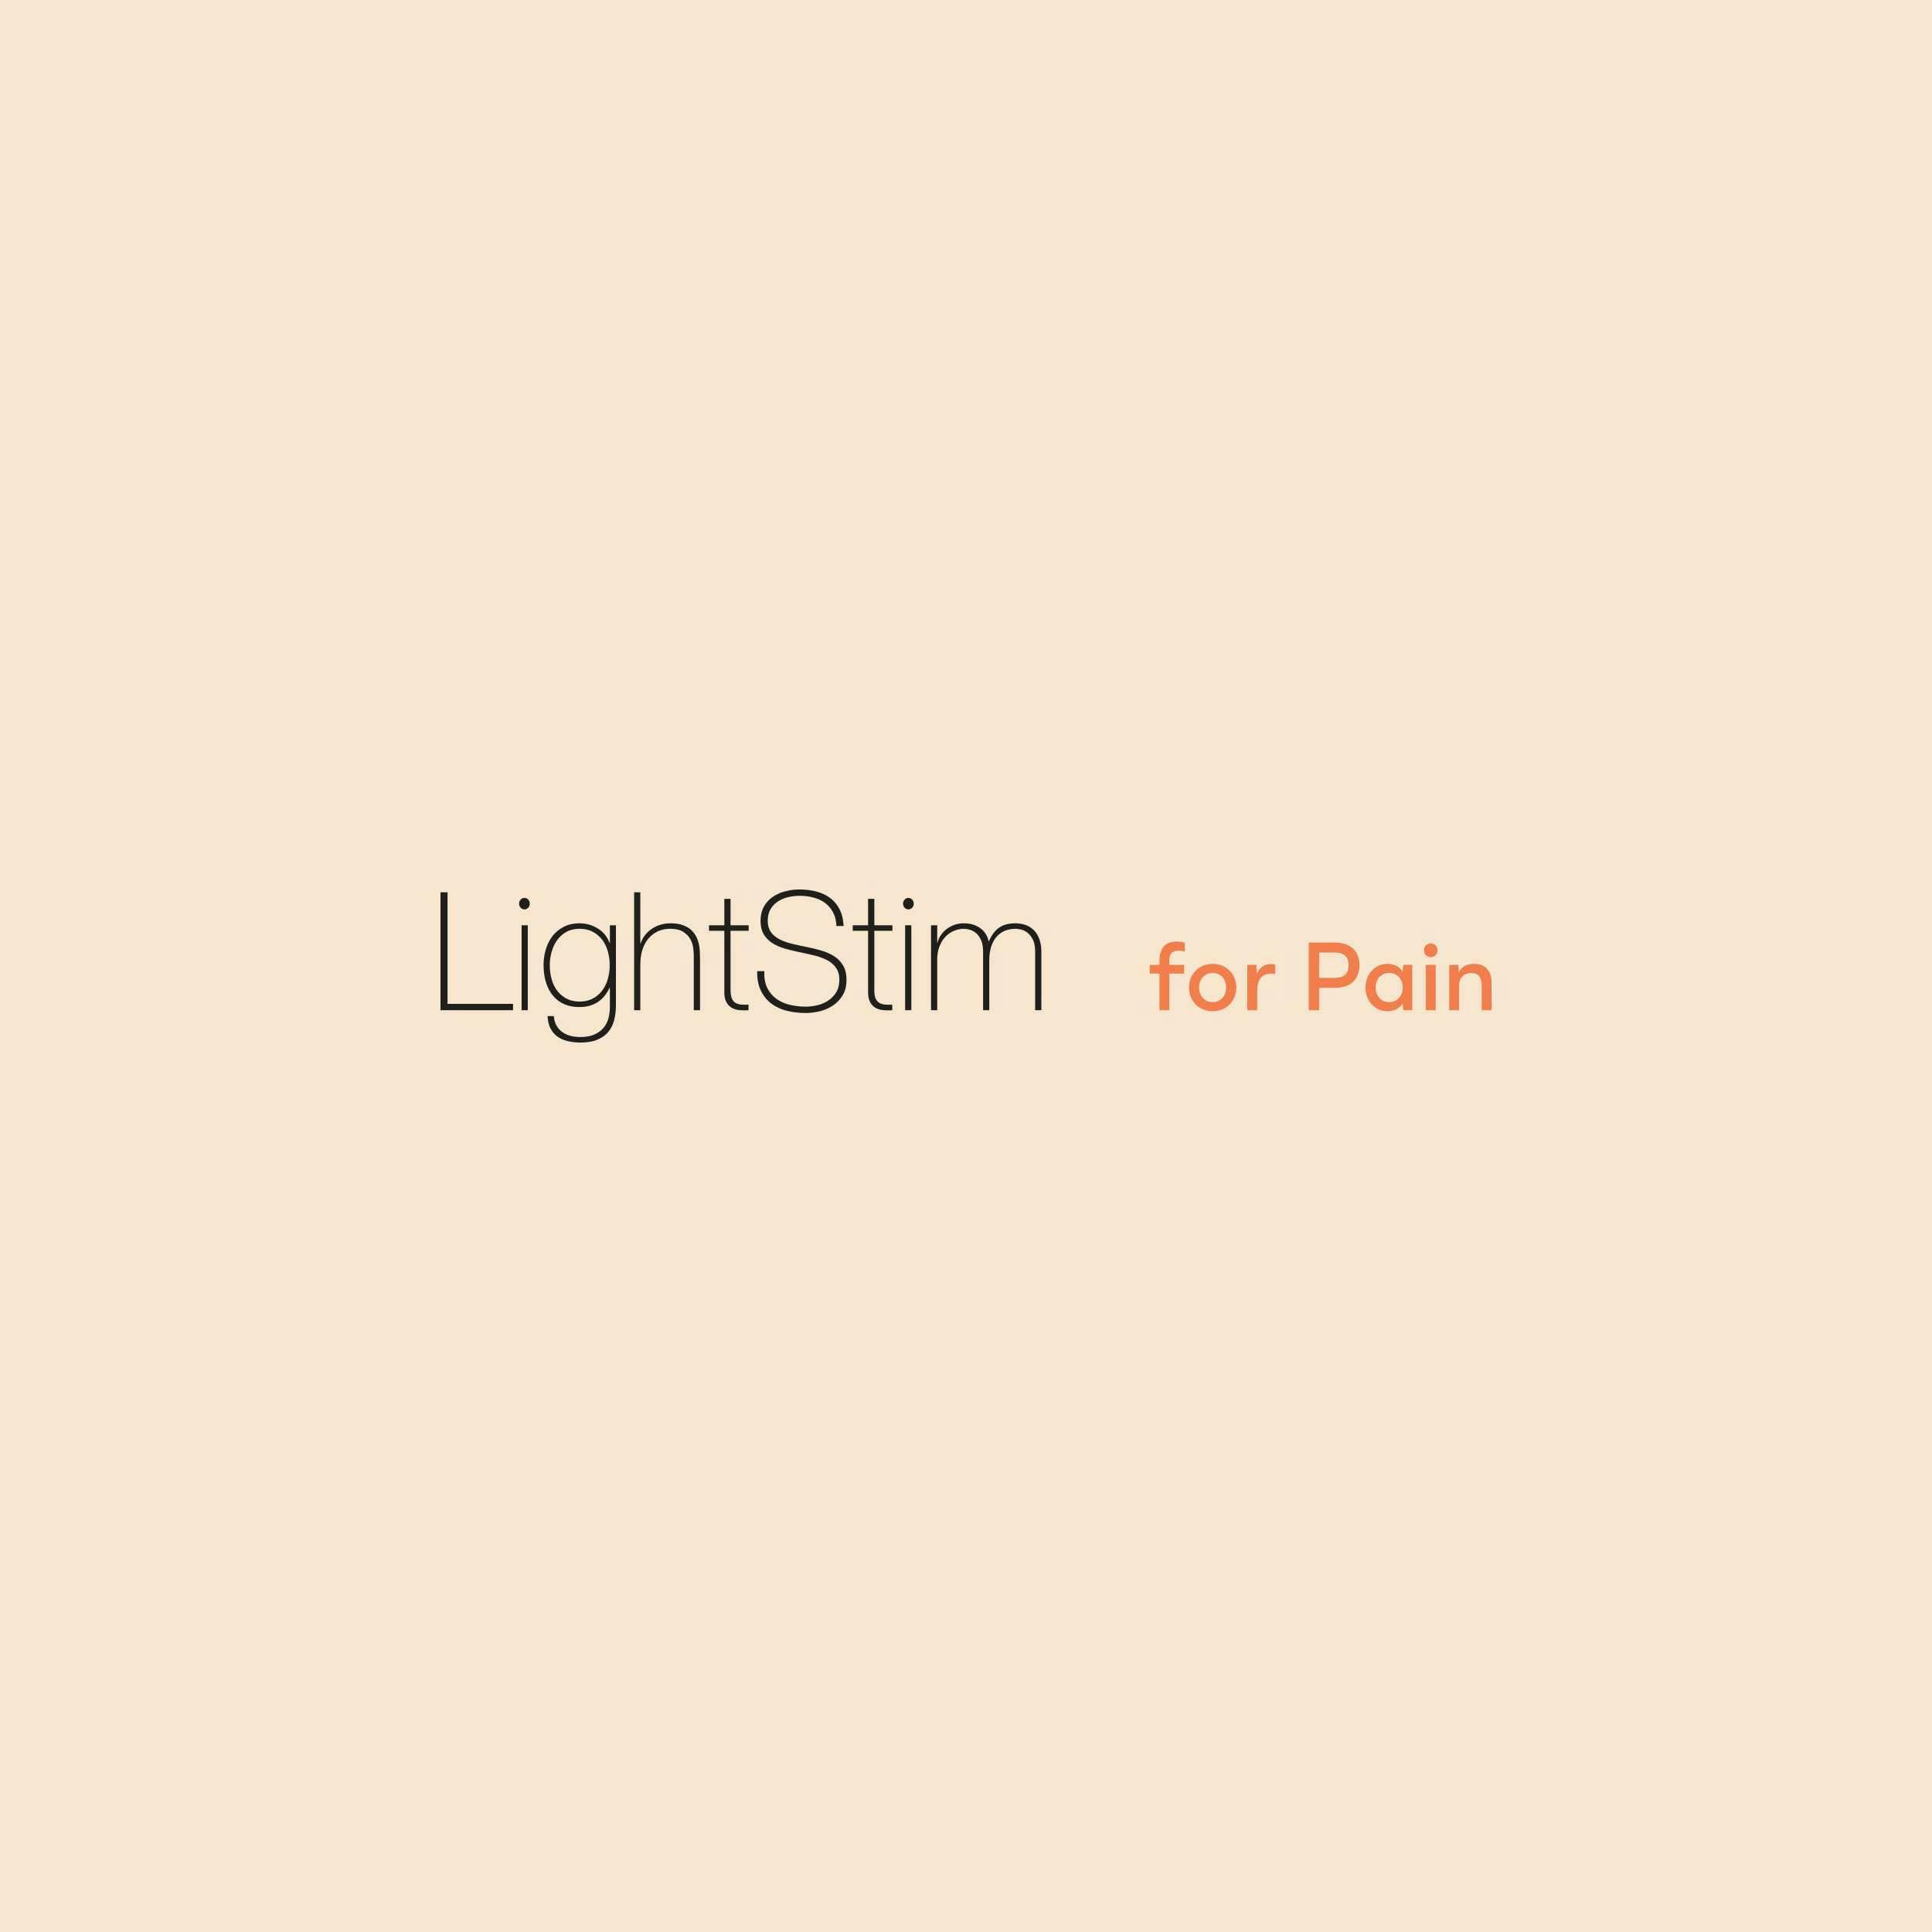 LightStim - Brand Identity, Packaging Design, Website Design, Social Media Design, and Art Direction